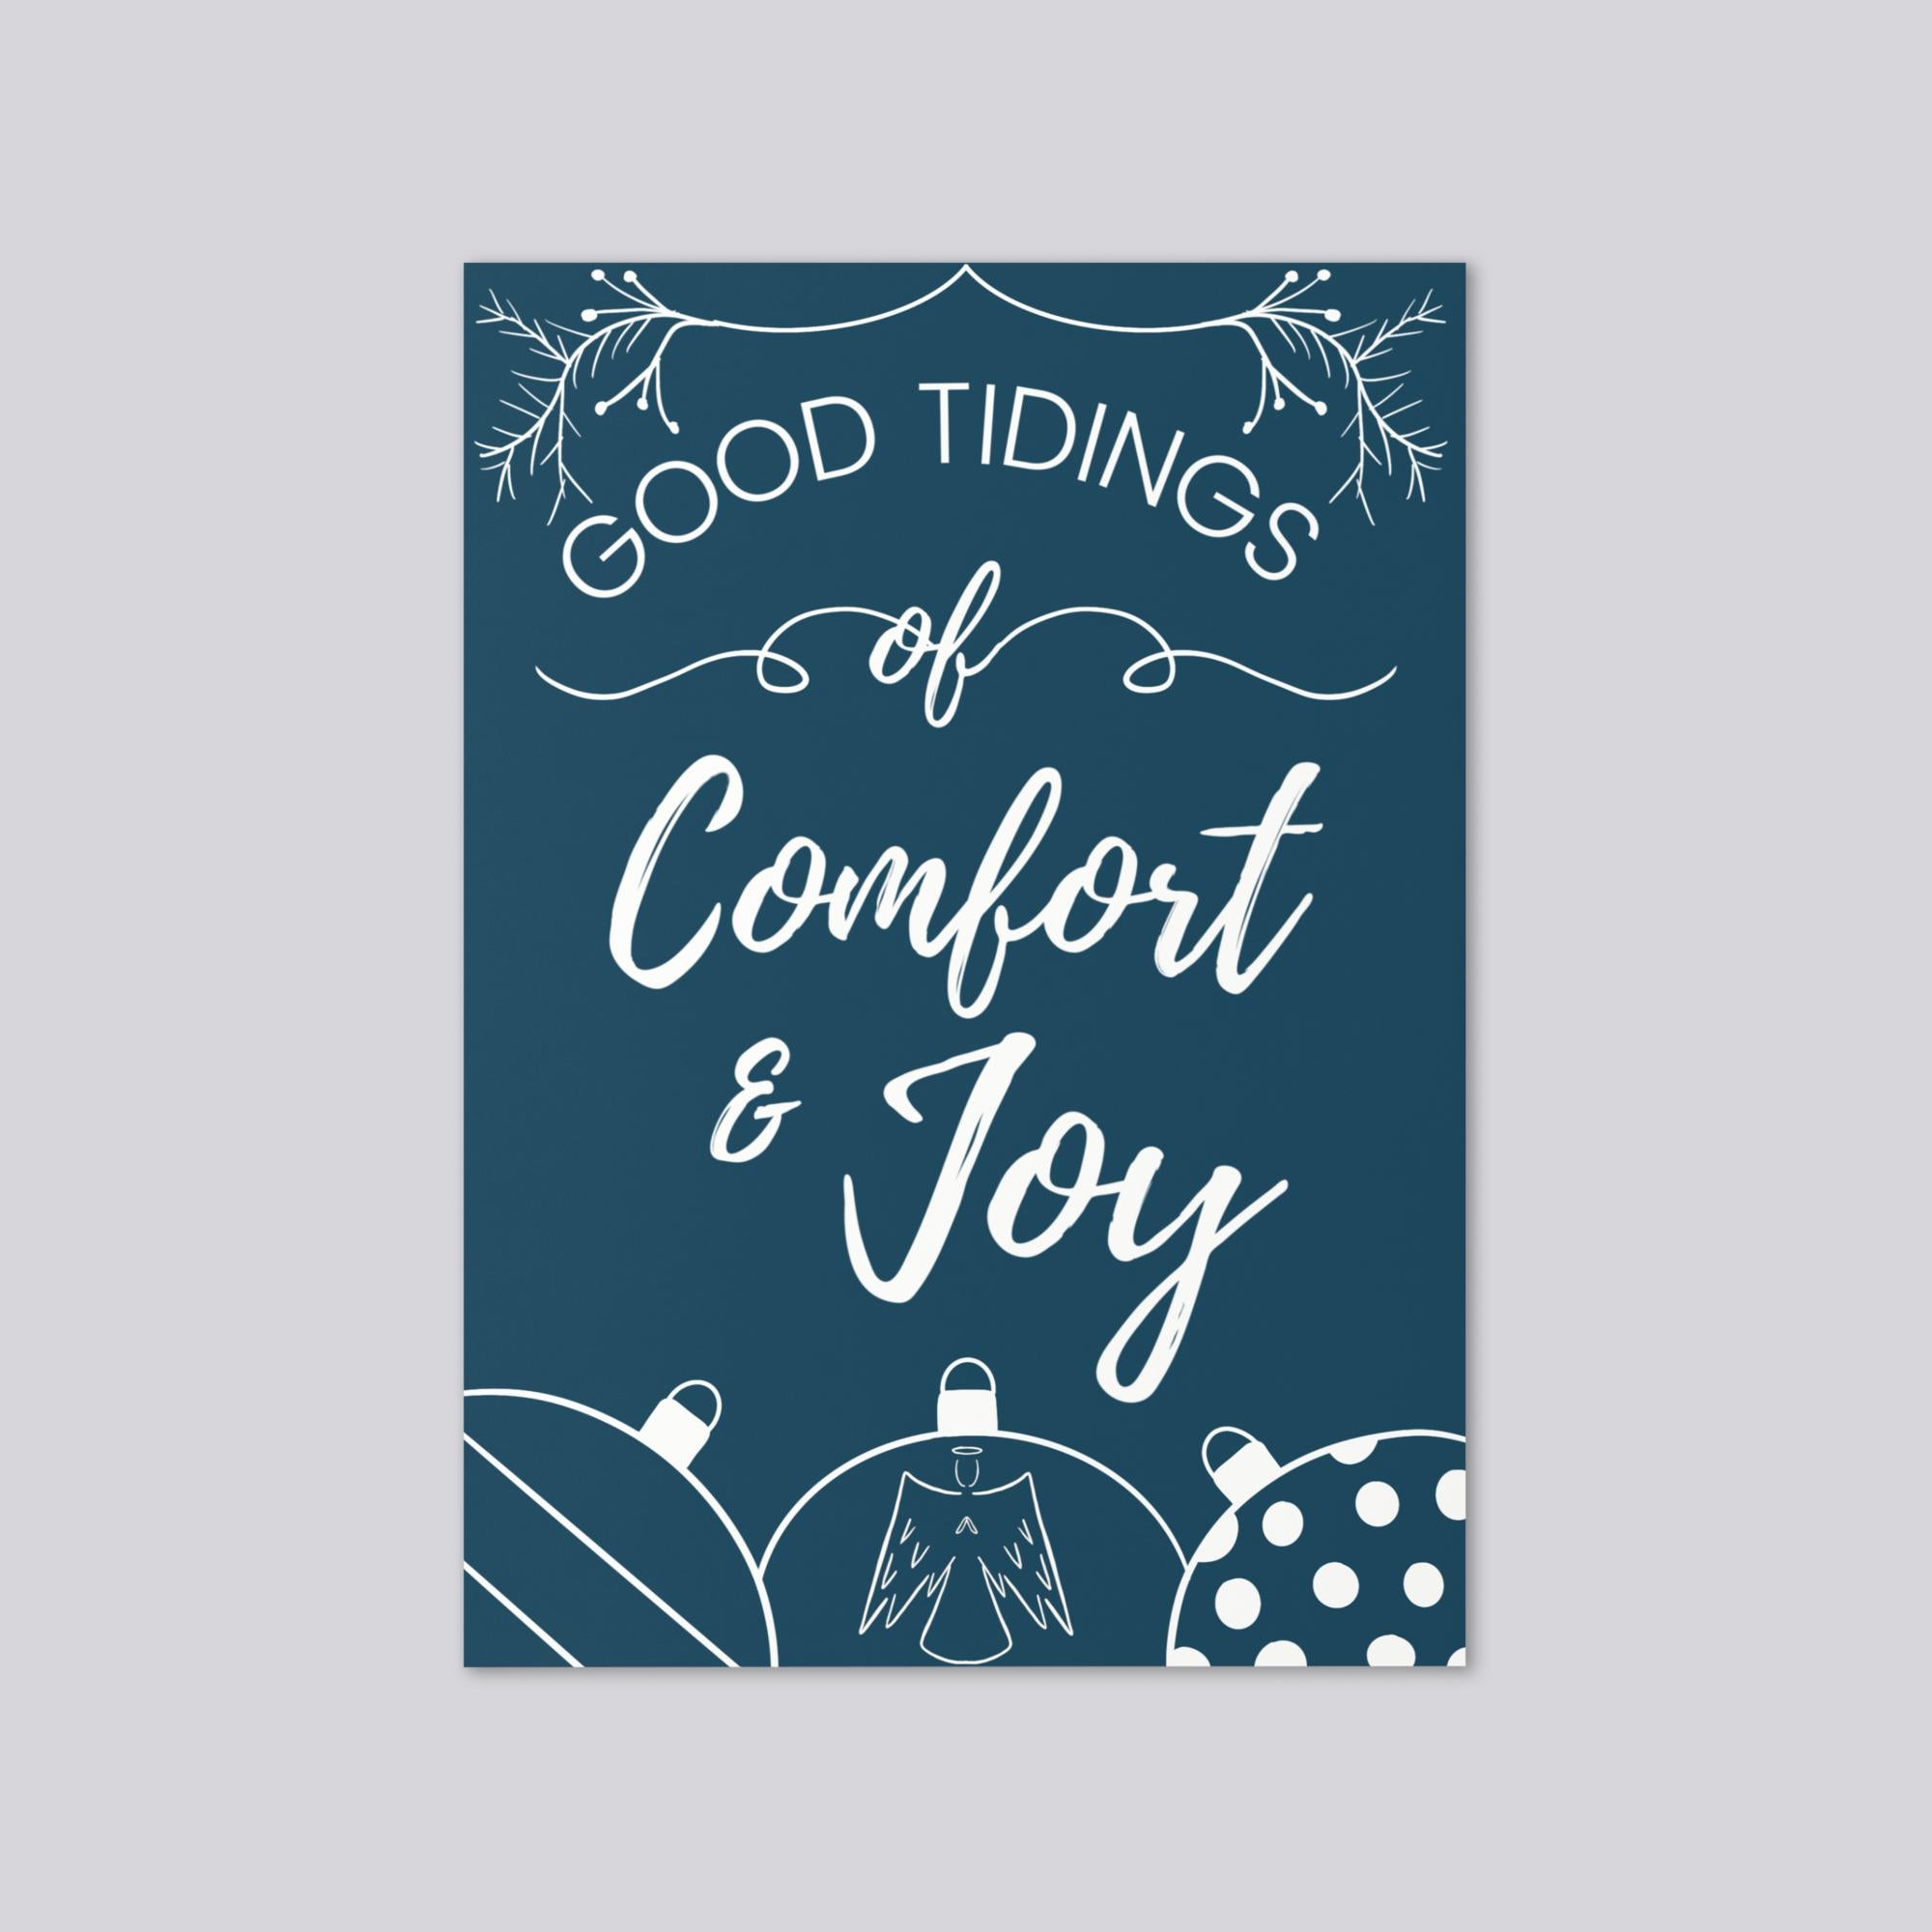 Good Tidings! Christmas Greeting Card